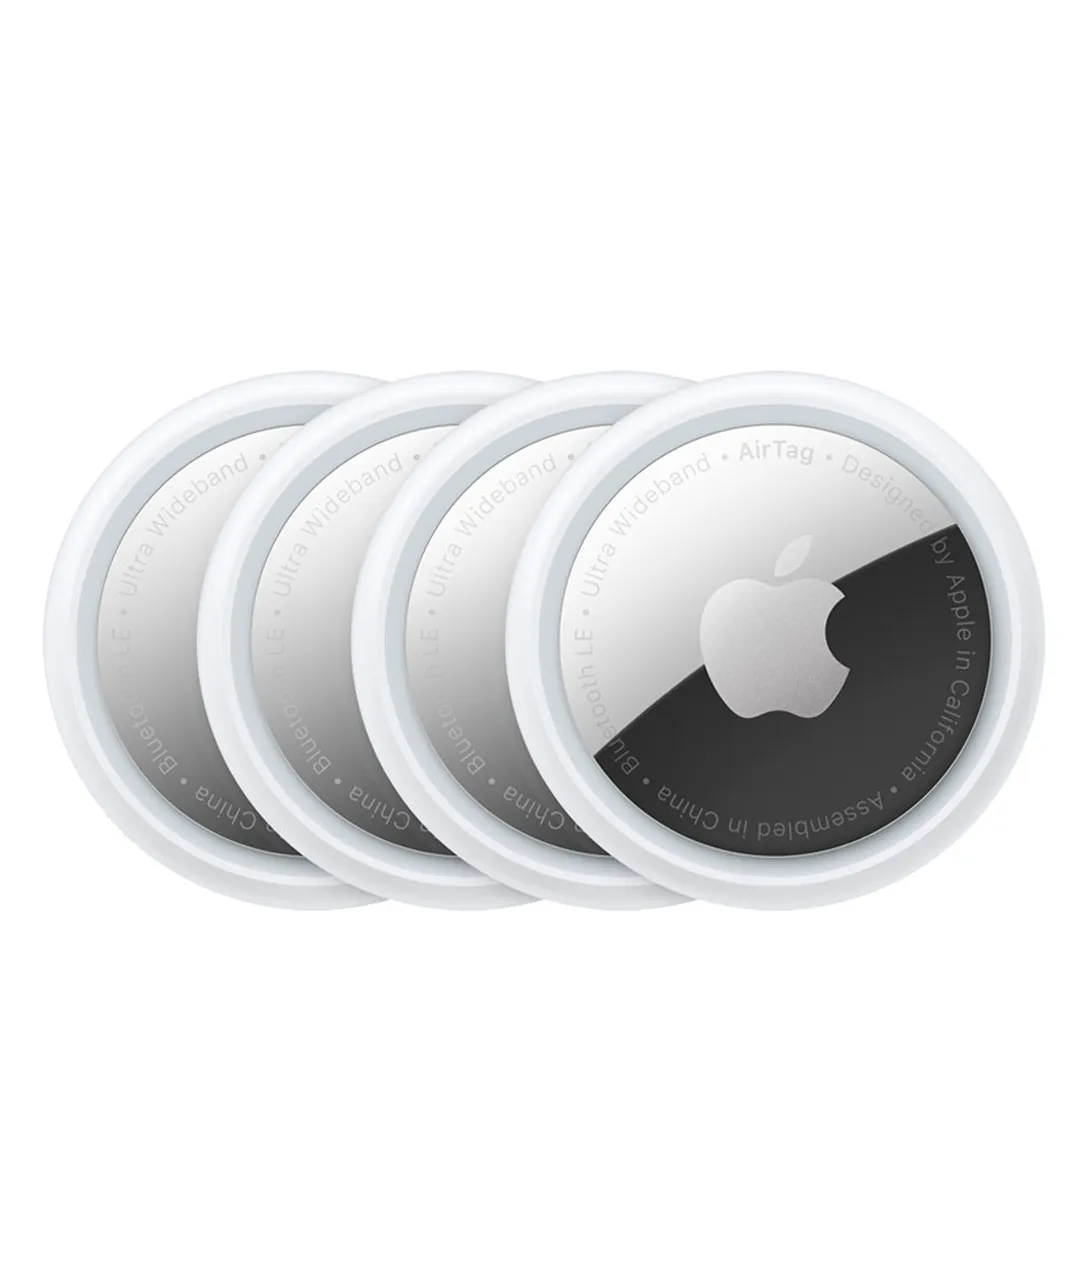 Поисковый трекер Apple AirTag (4 штуки)